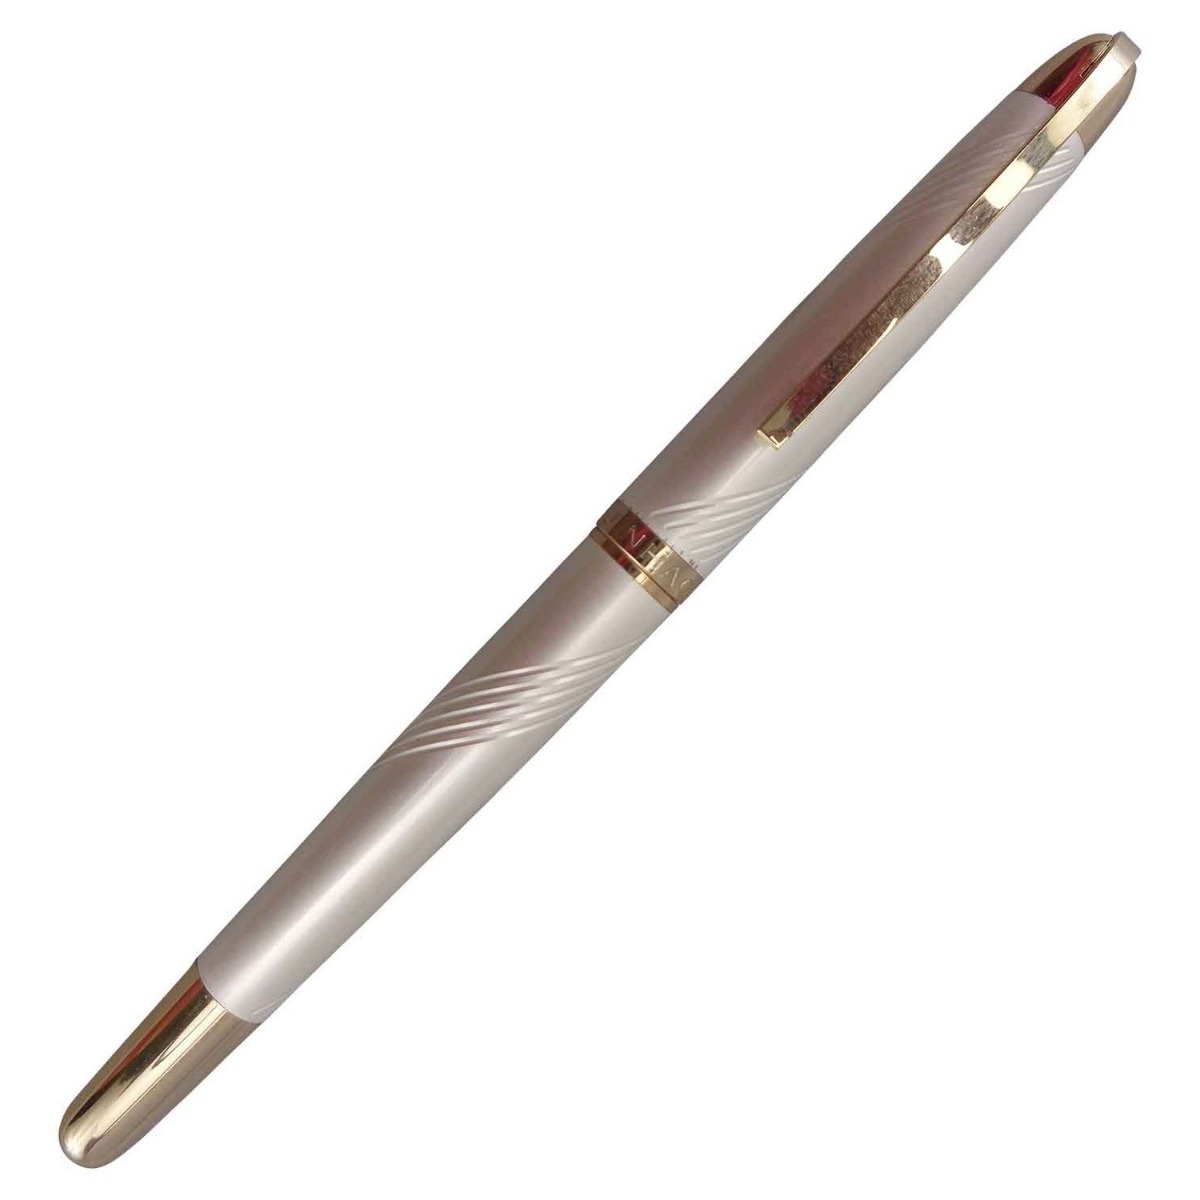 Jinhao 606 Model:16039 Slim White Color Glossy Finish Design Body With Gold Clip Cap Design Fine Tip Roller Ball Pen 